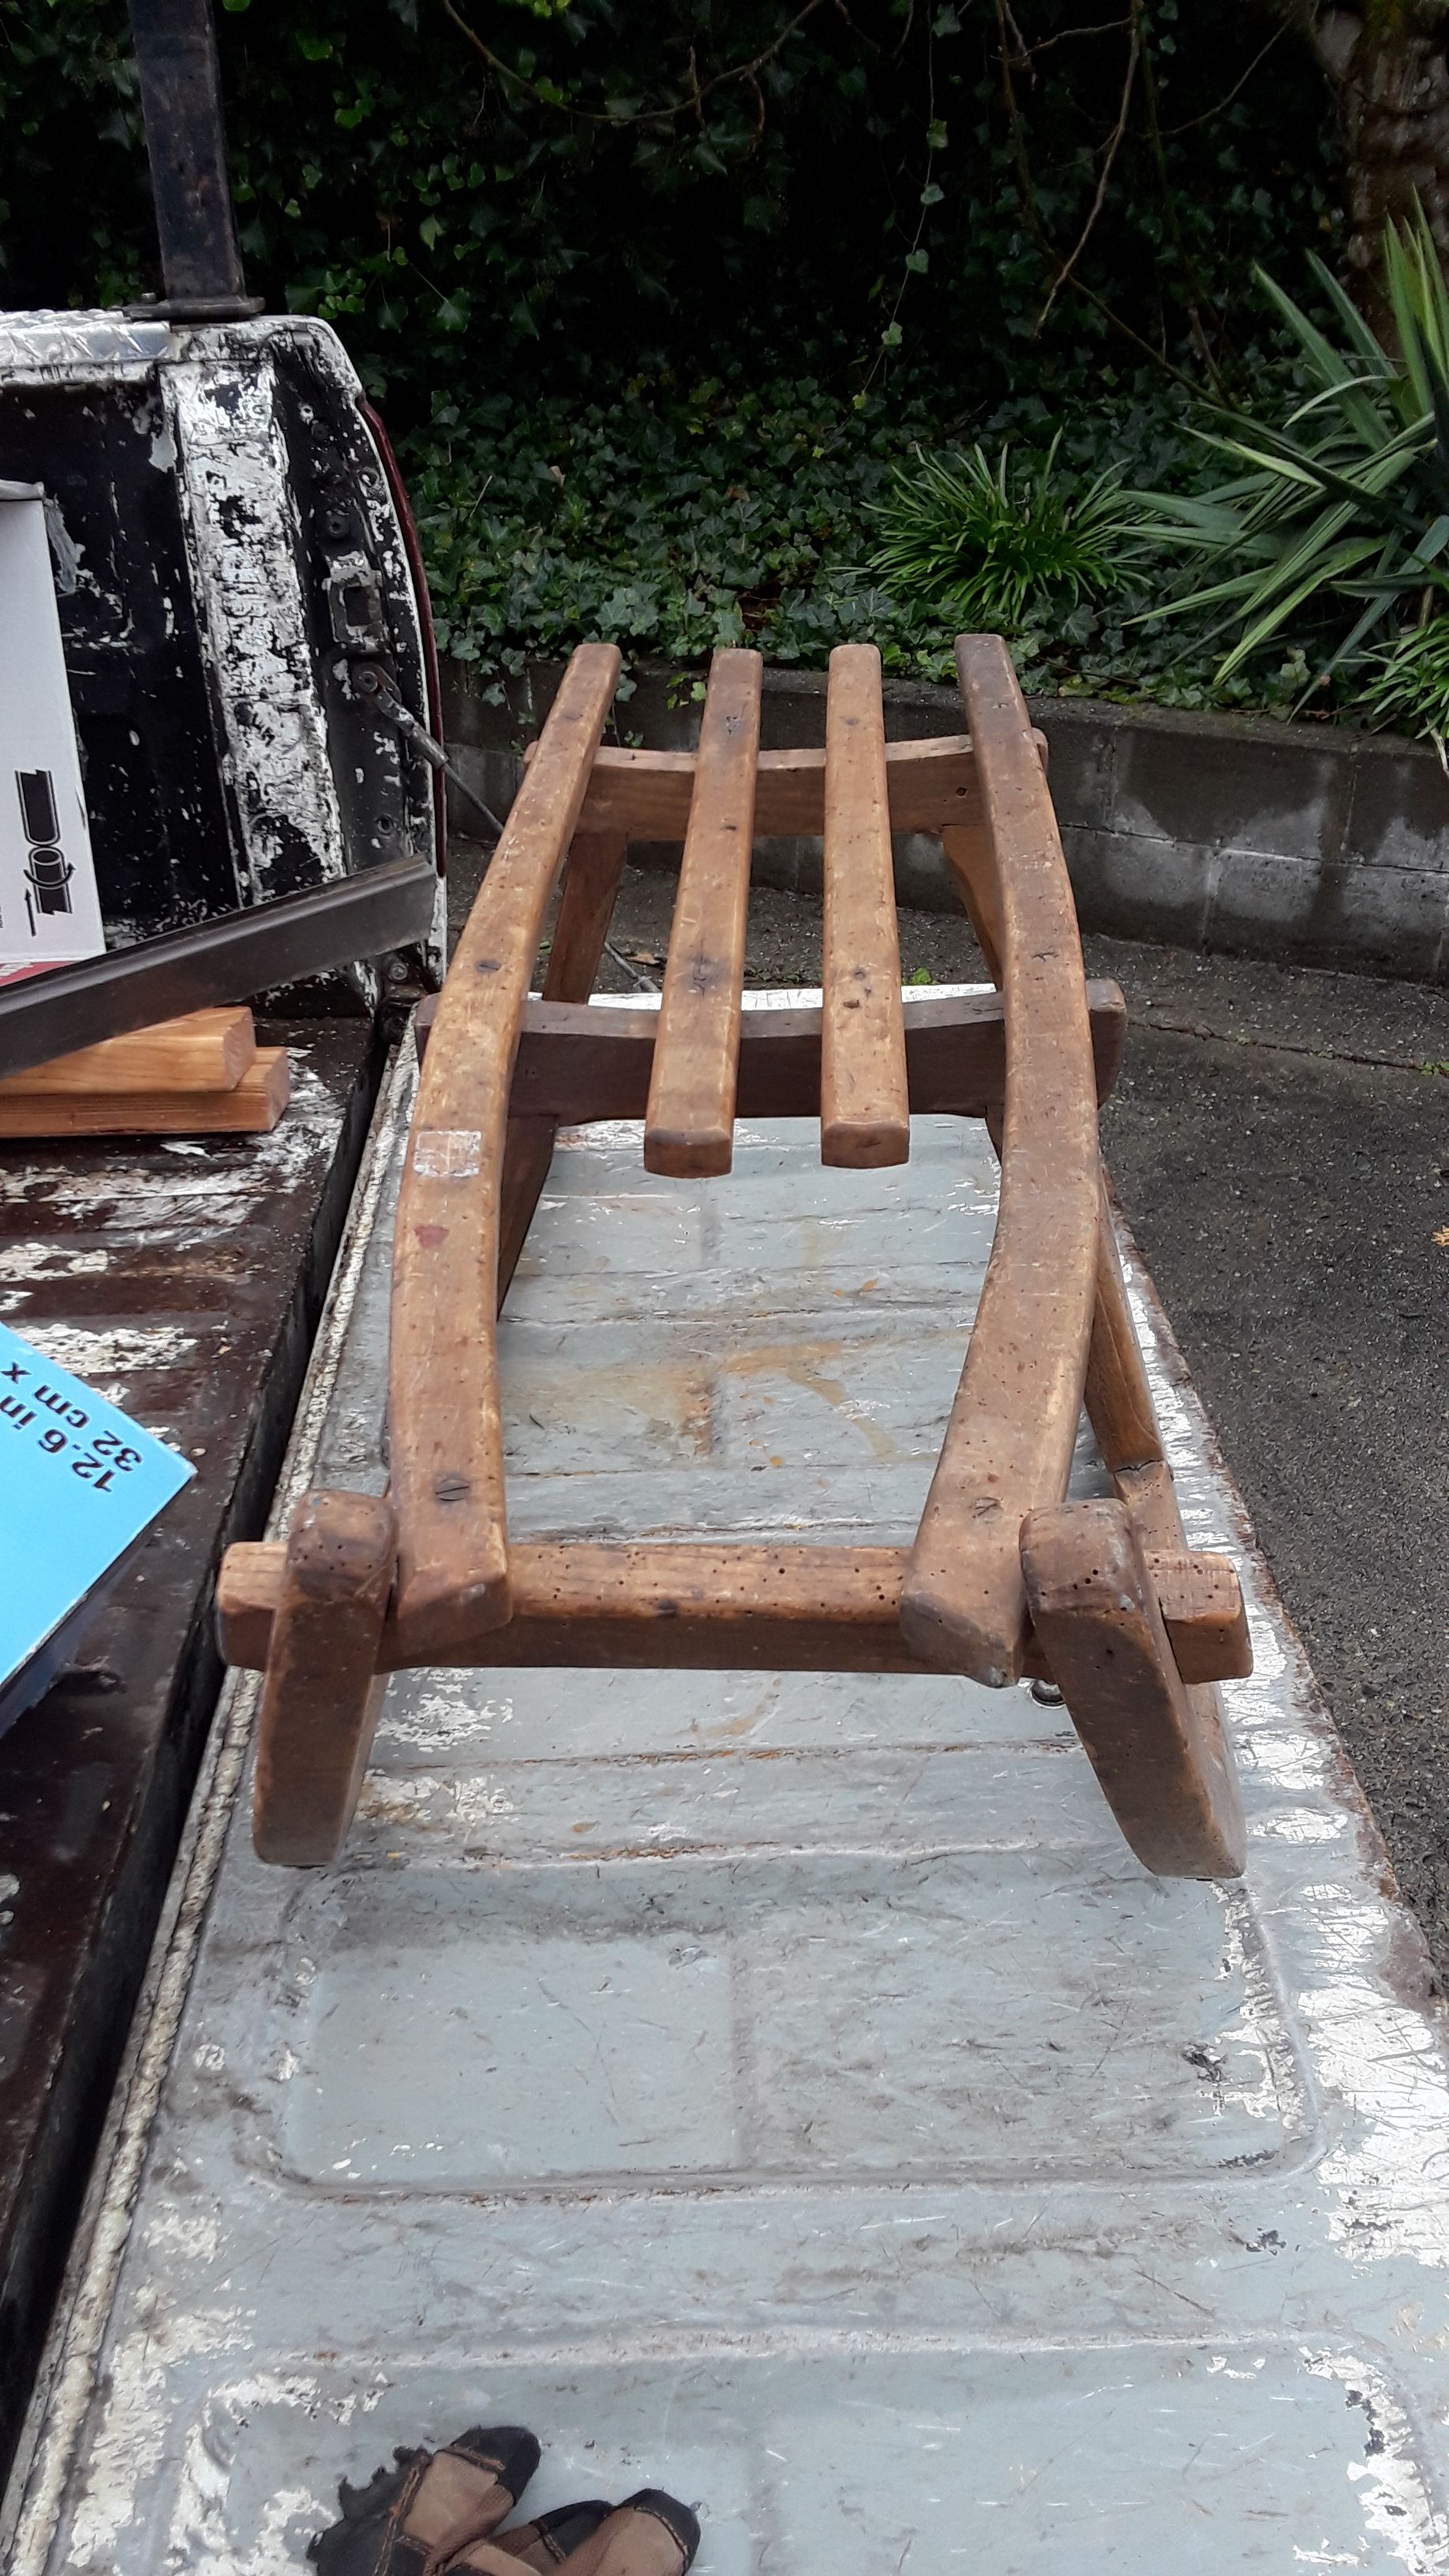 Antique wooden sled